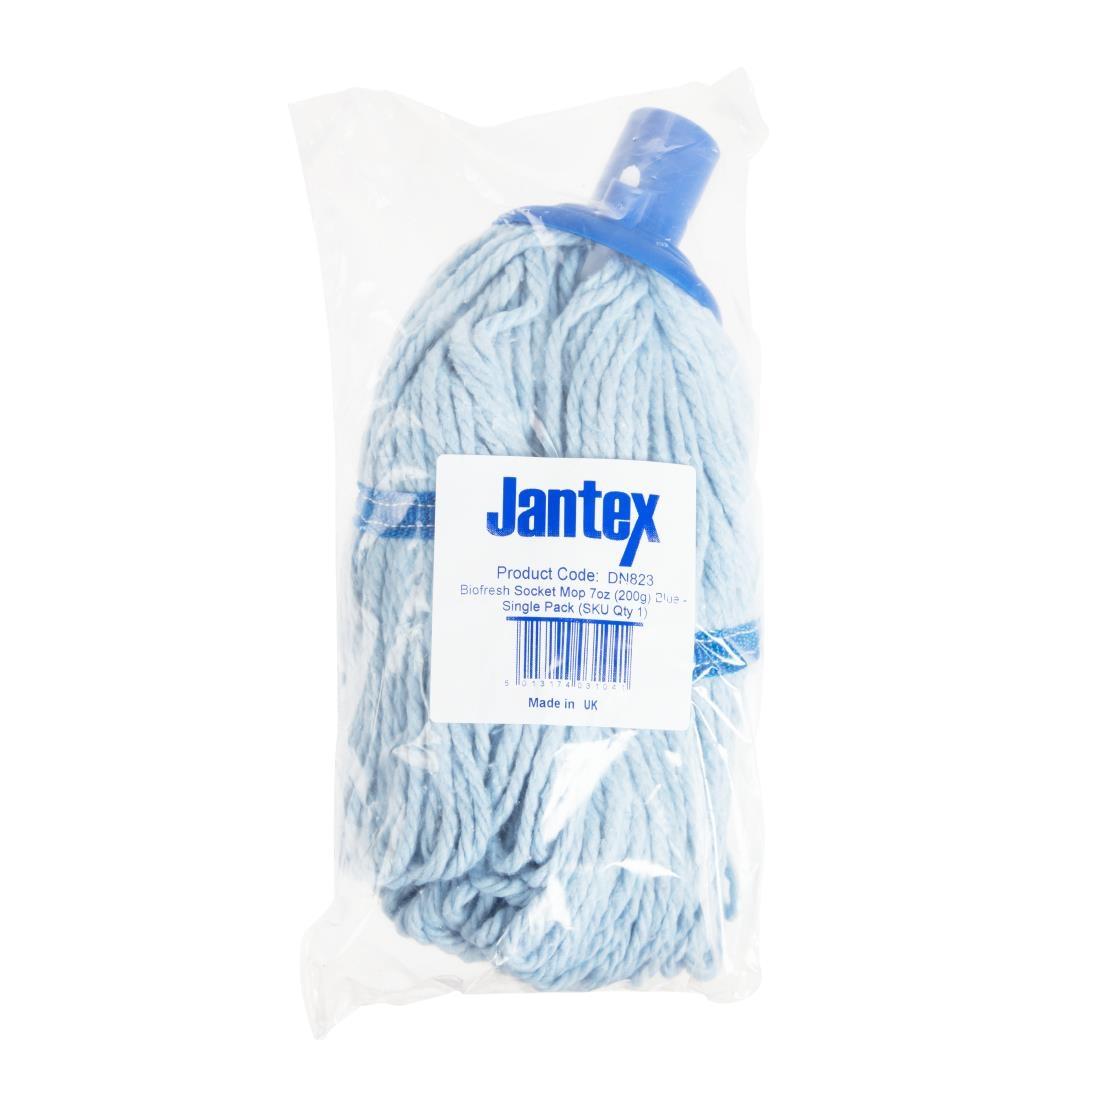 Jantex Bio Fresh Socket Mop Head Blue - DN823  - 7